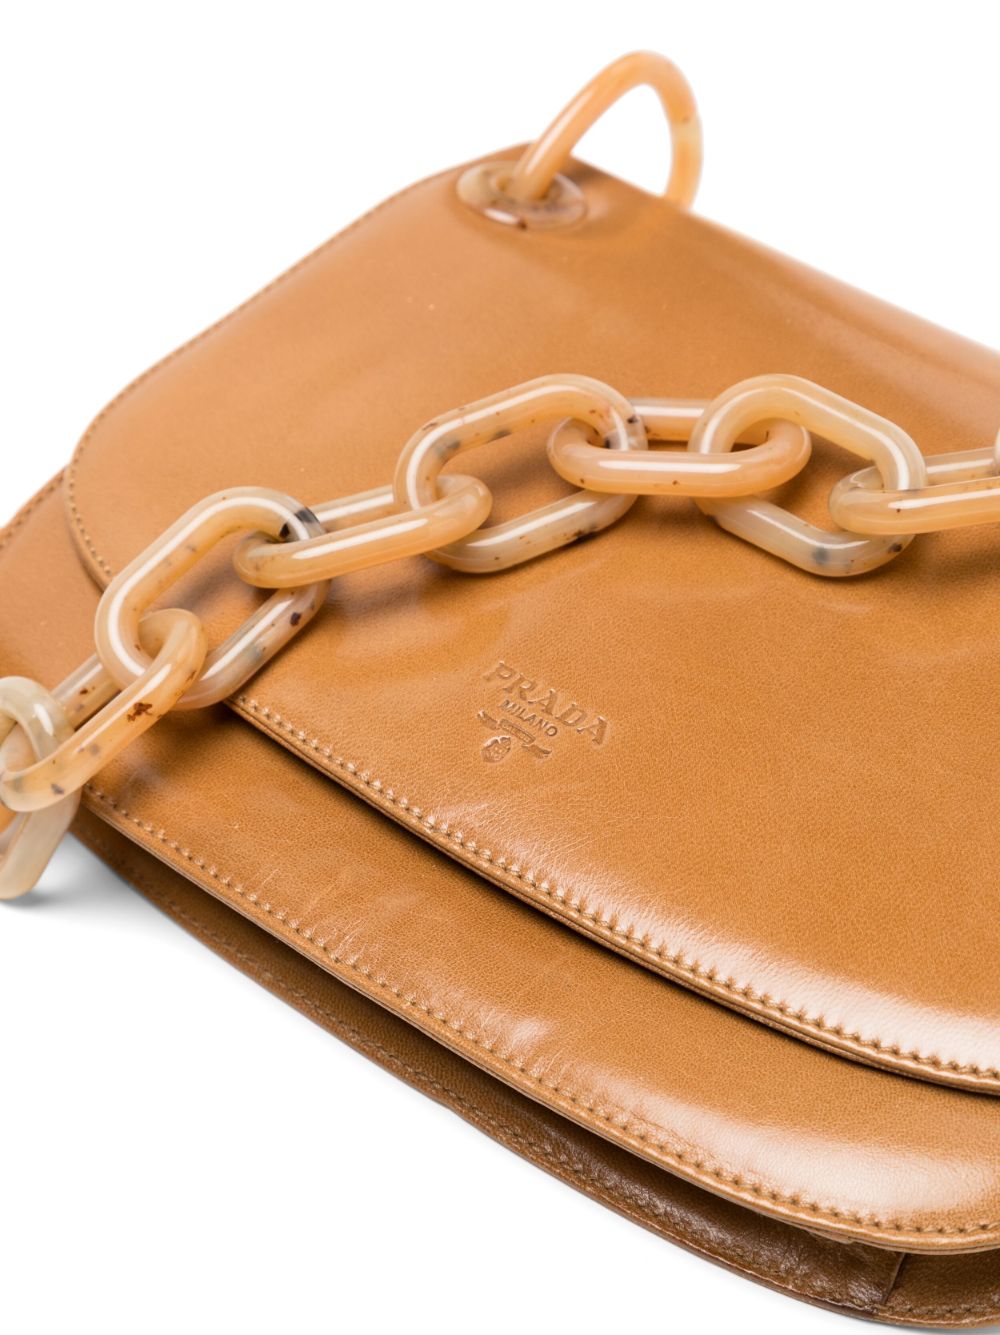 Shop authentic Prada Denim Chain Shoulder Bag at revogue for just USD 425.00